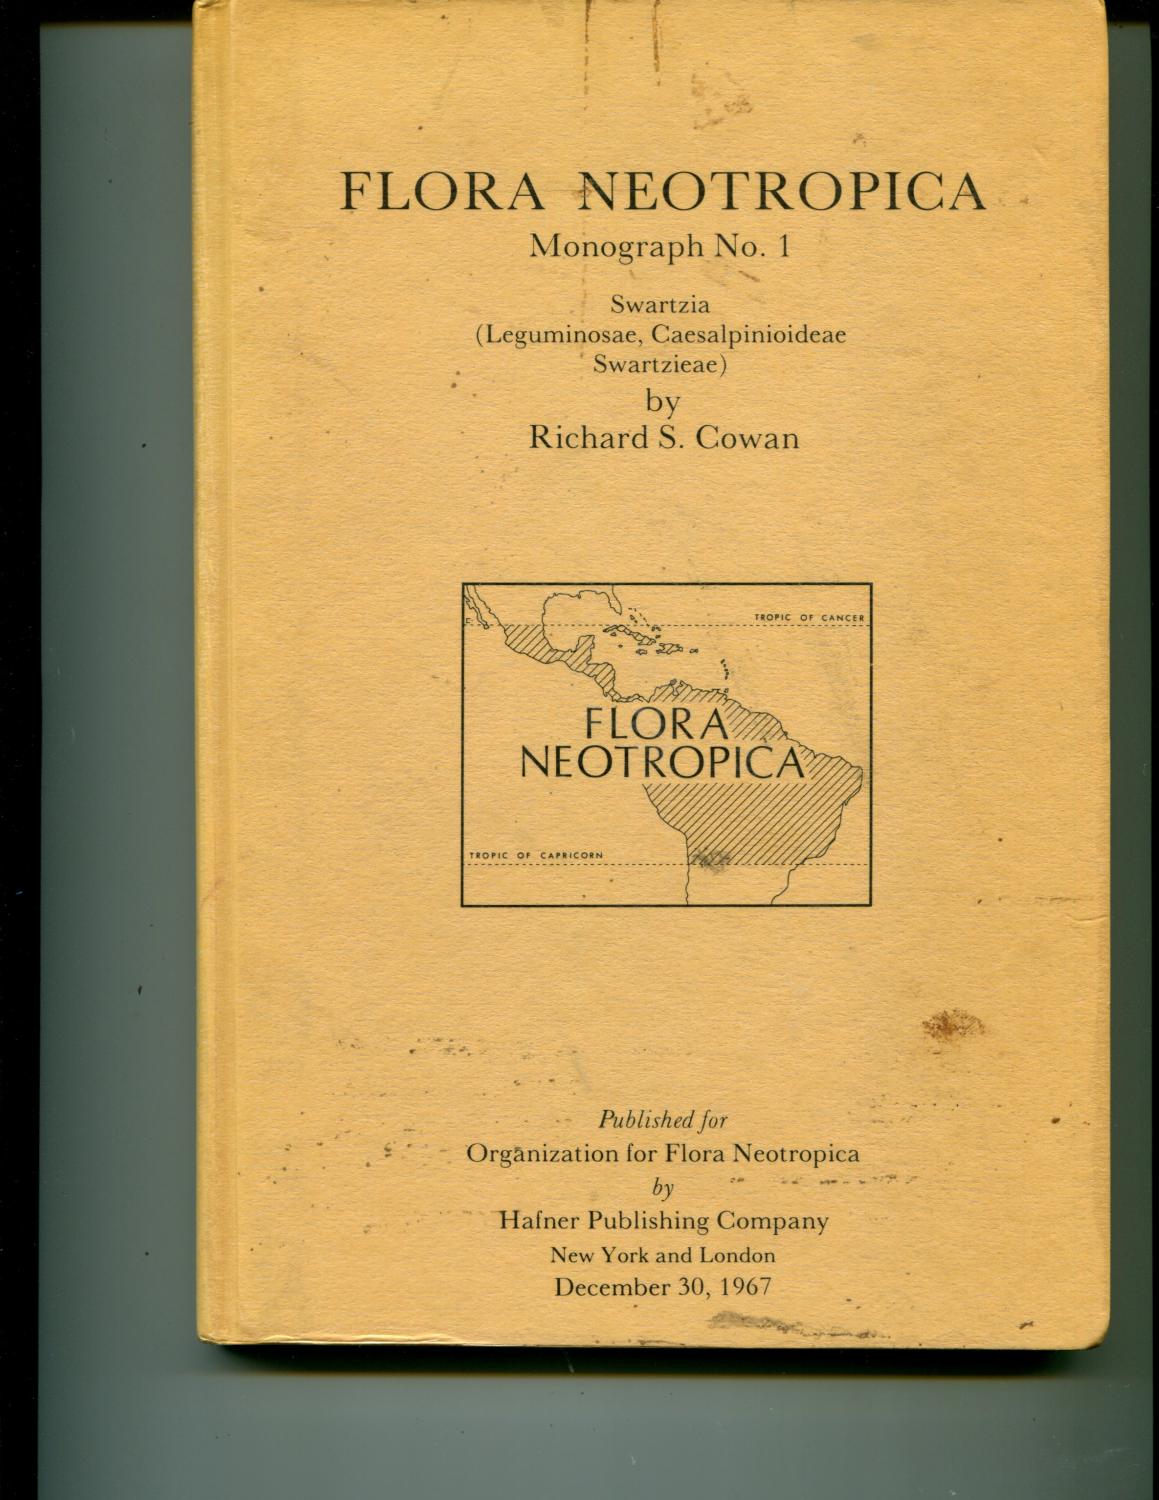 Swartzia (Leguminosae, Caesalpiniodeae, Swartzieae) (Flora Neotropica Monograph No. 1) - Richard S. Cowan